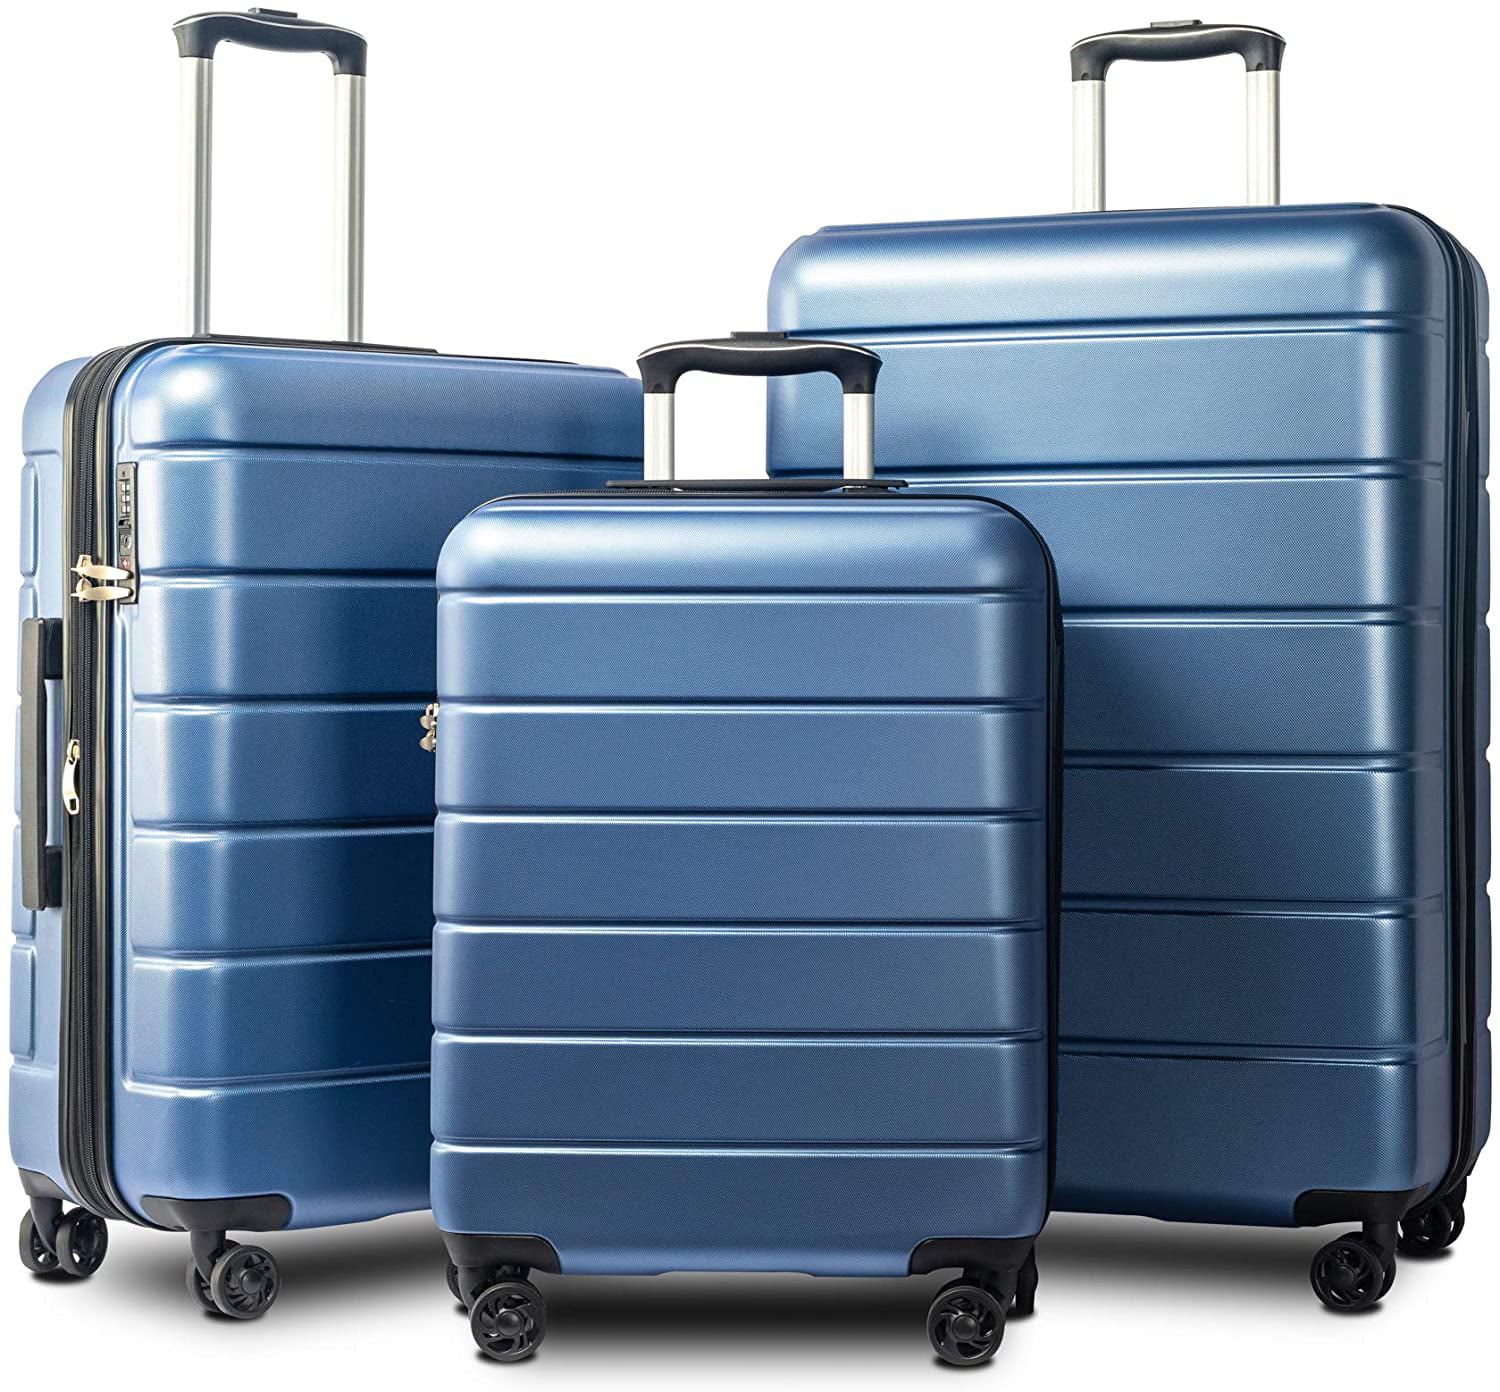 Segmart - 3 Piece Expandable Luggage Sets on Sale, SEGMART Suitcase ...